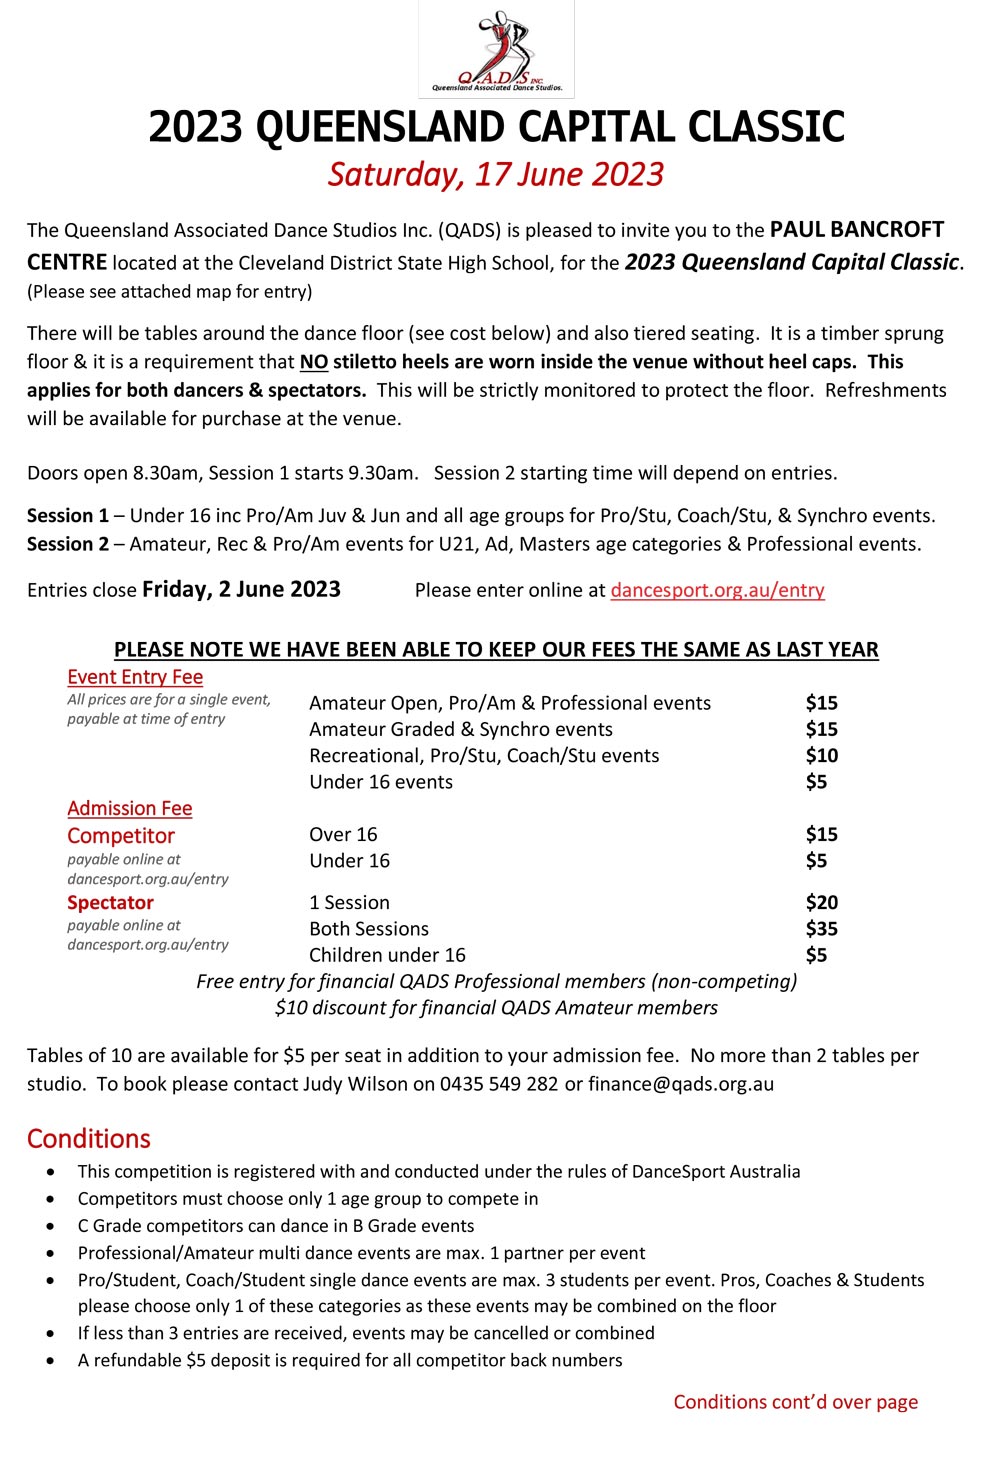 2023 QADS Queensland Capital Classic invite pic 1